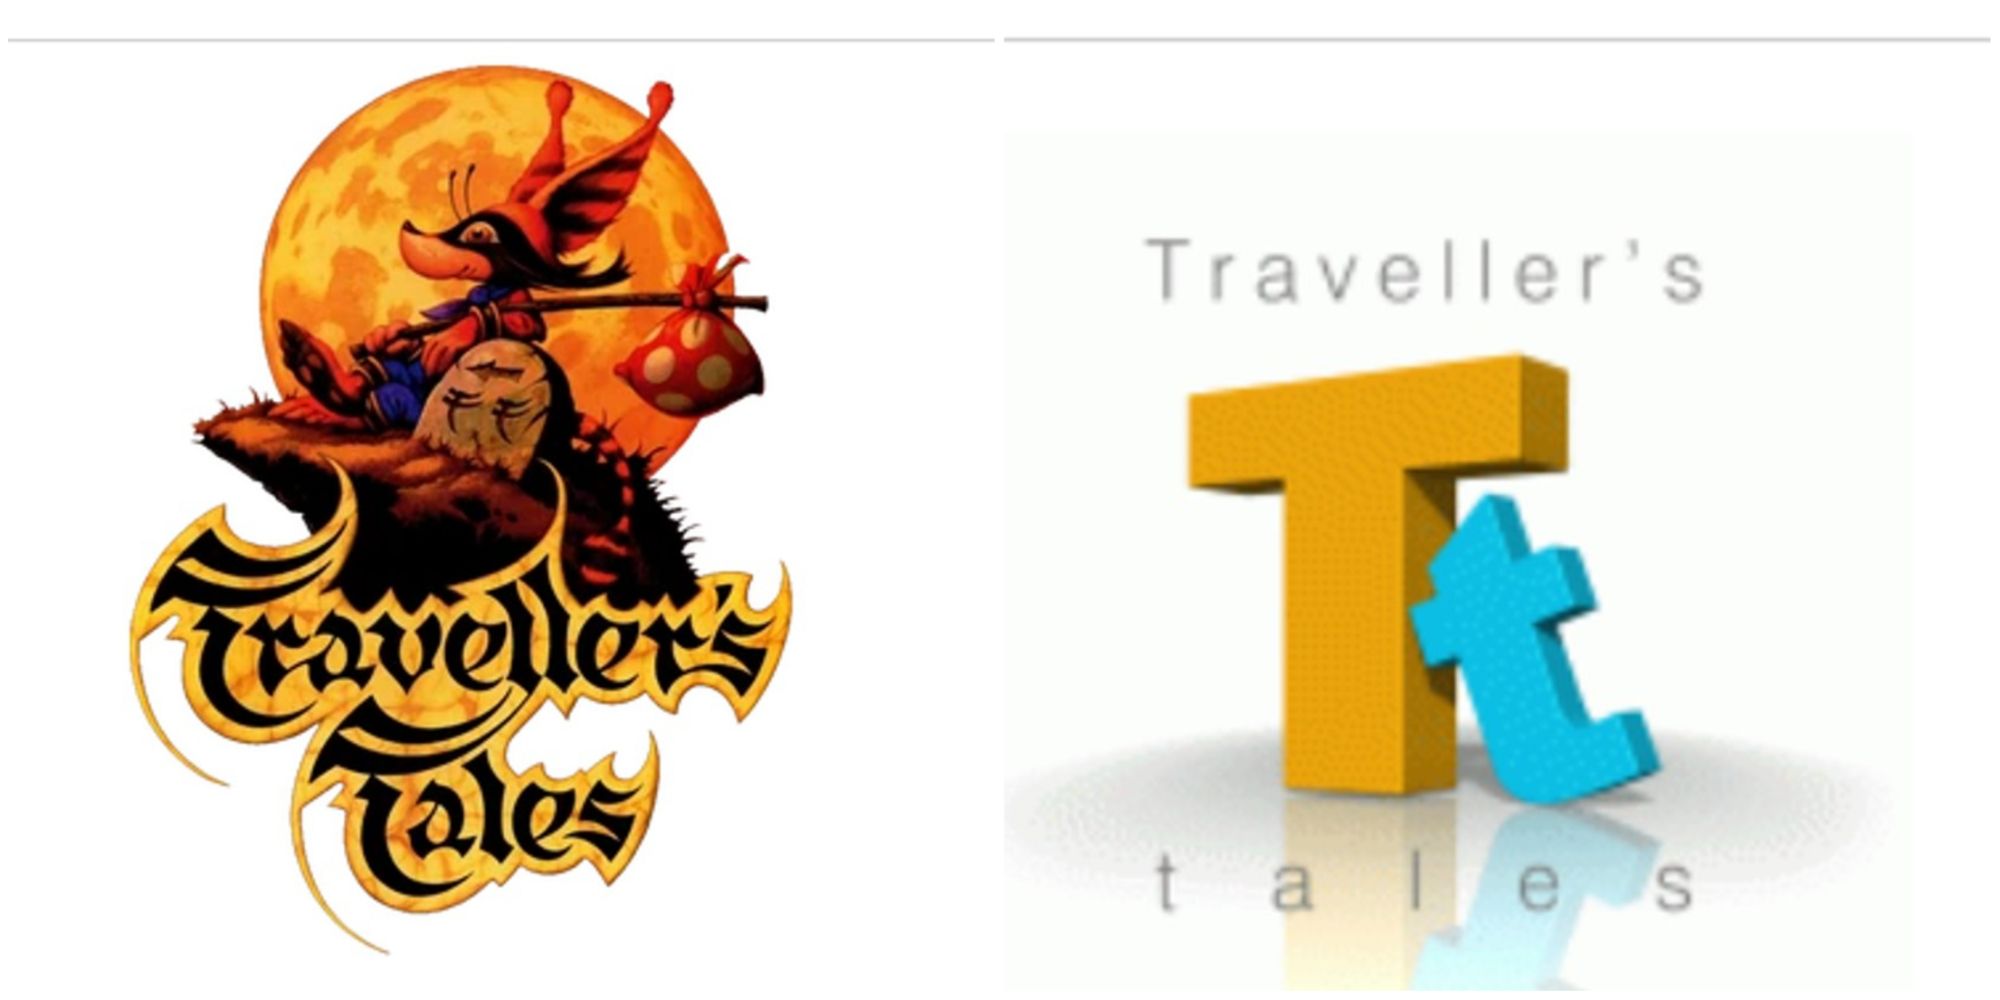 TT Games Logo Comparison